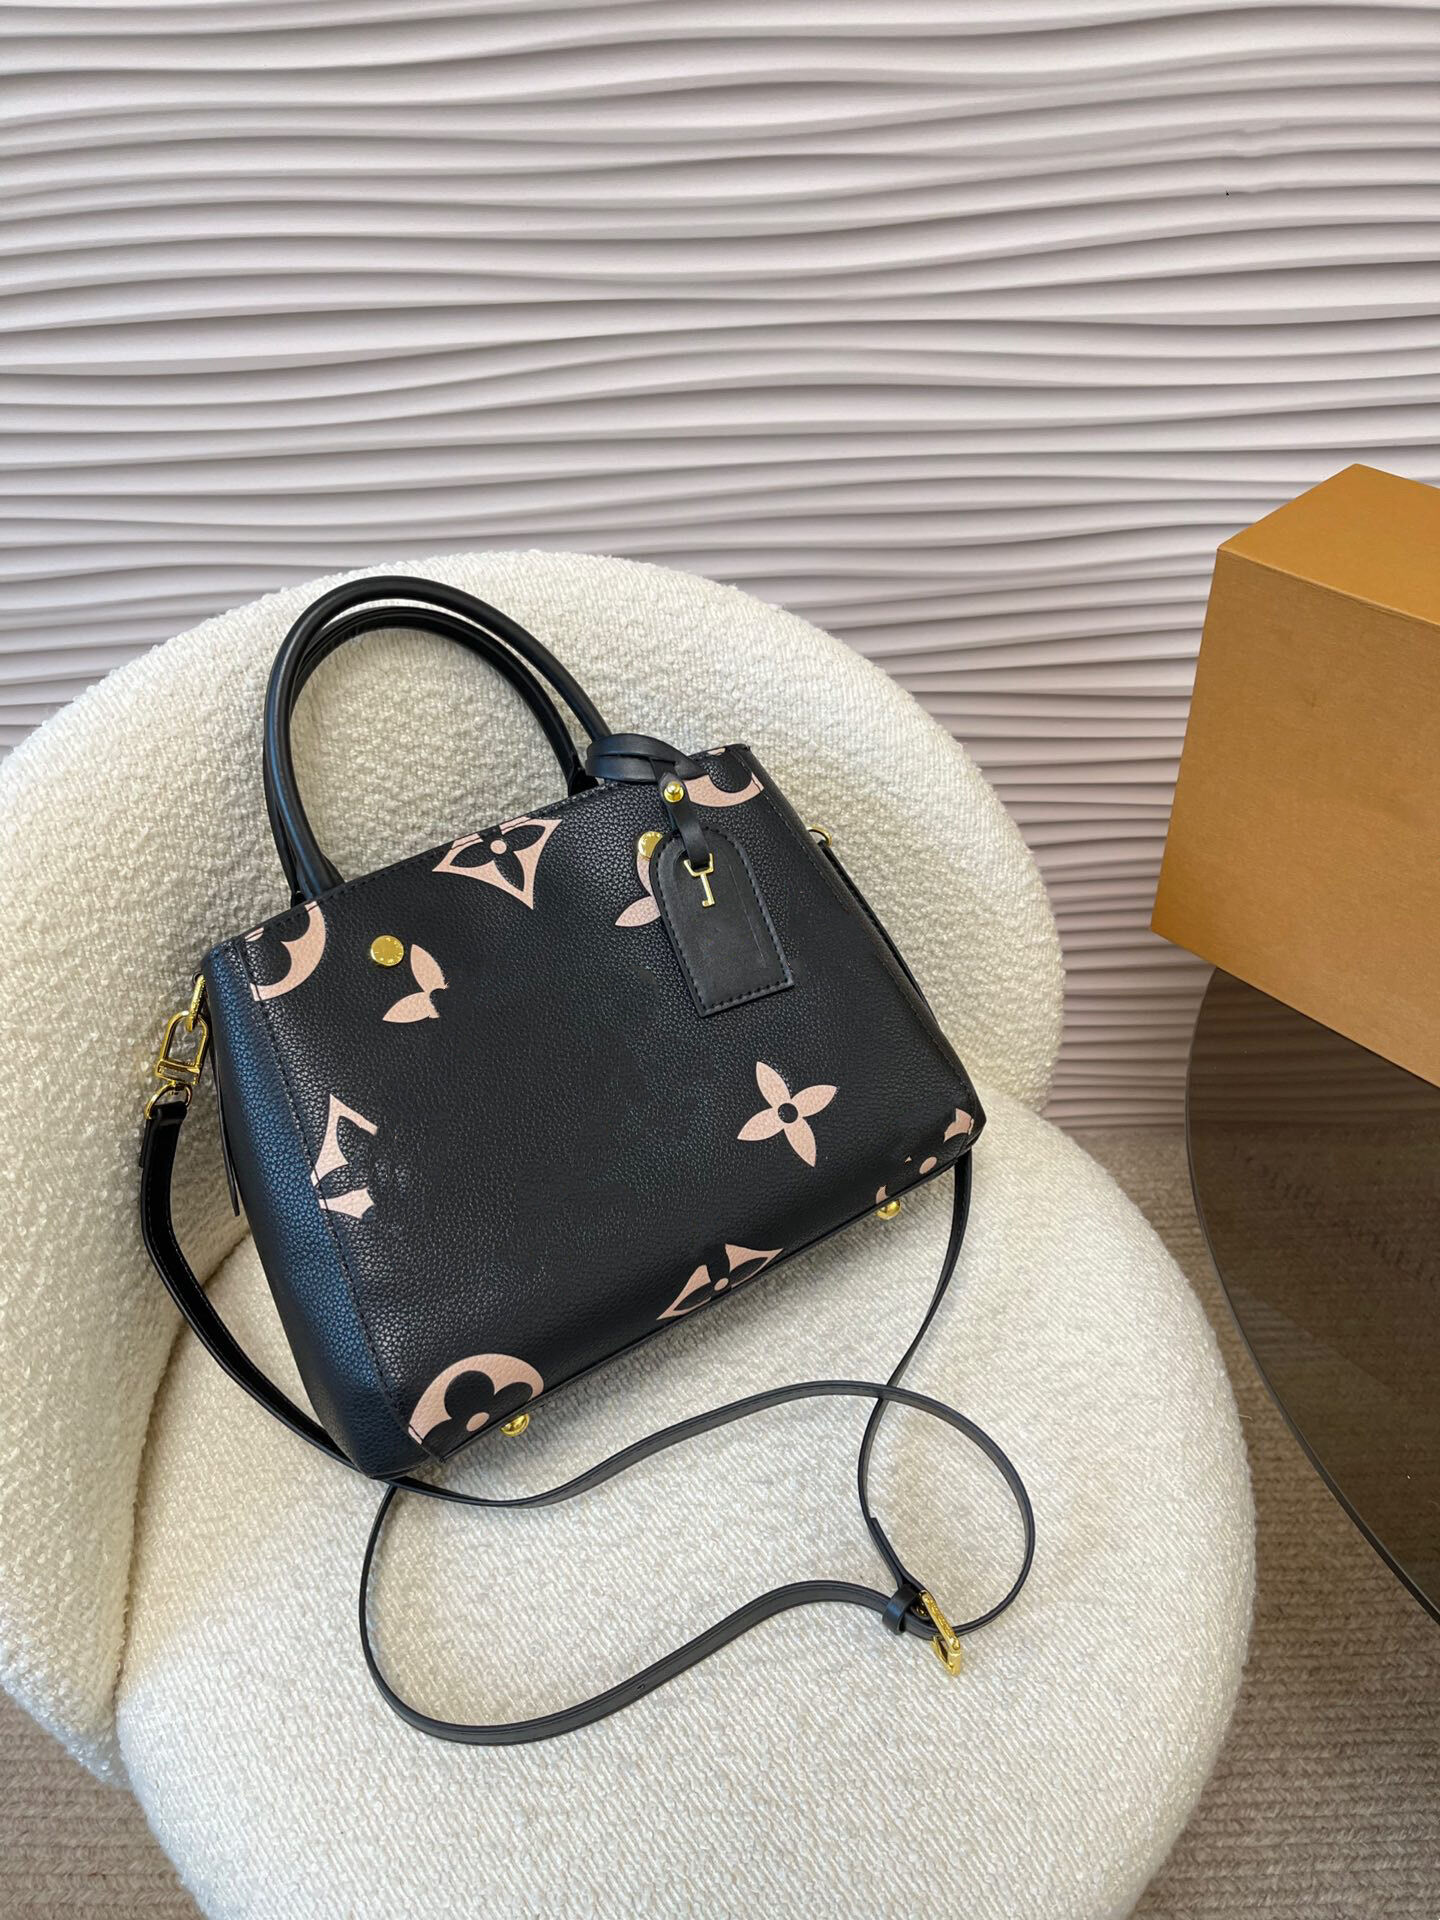 Sarah Jessica Parker Handbags Launch: The Seven Essentials | Vogue